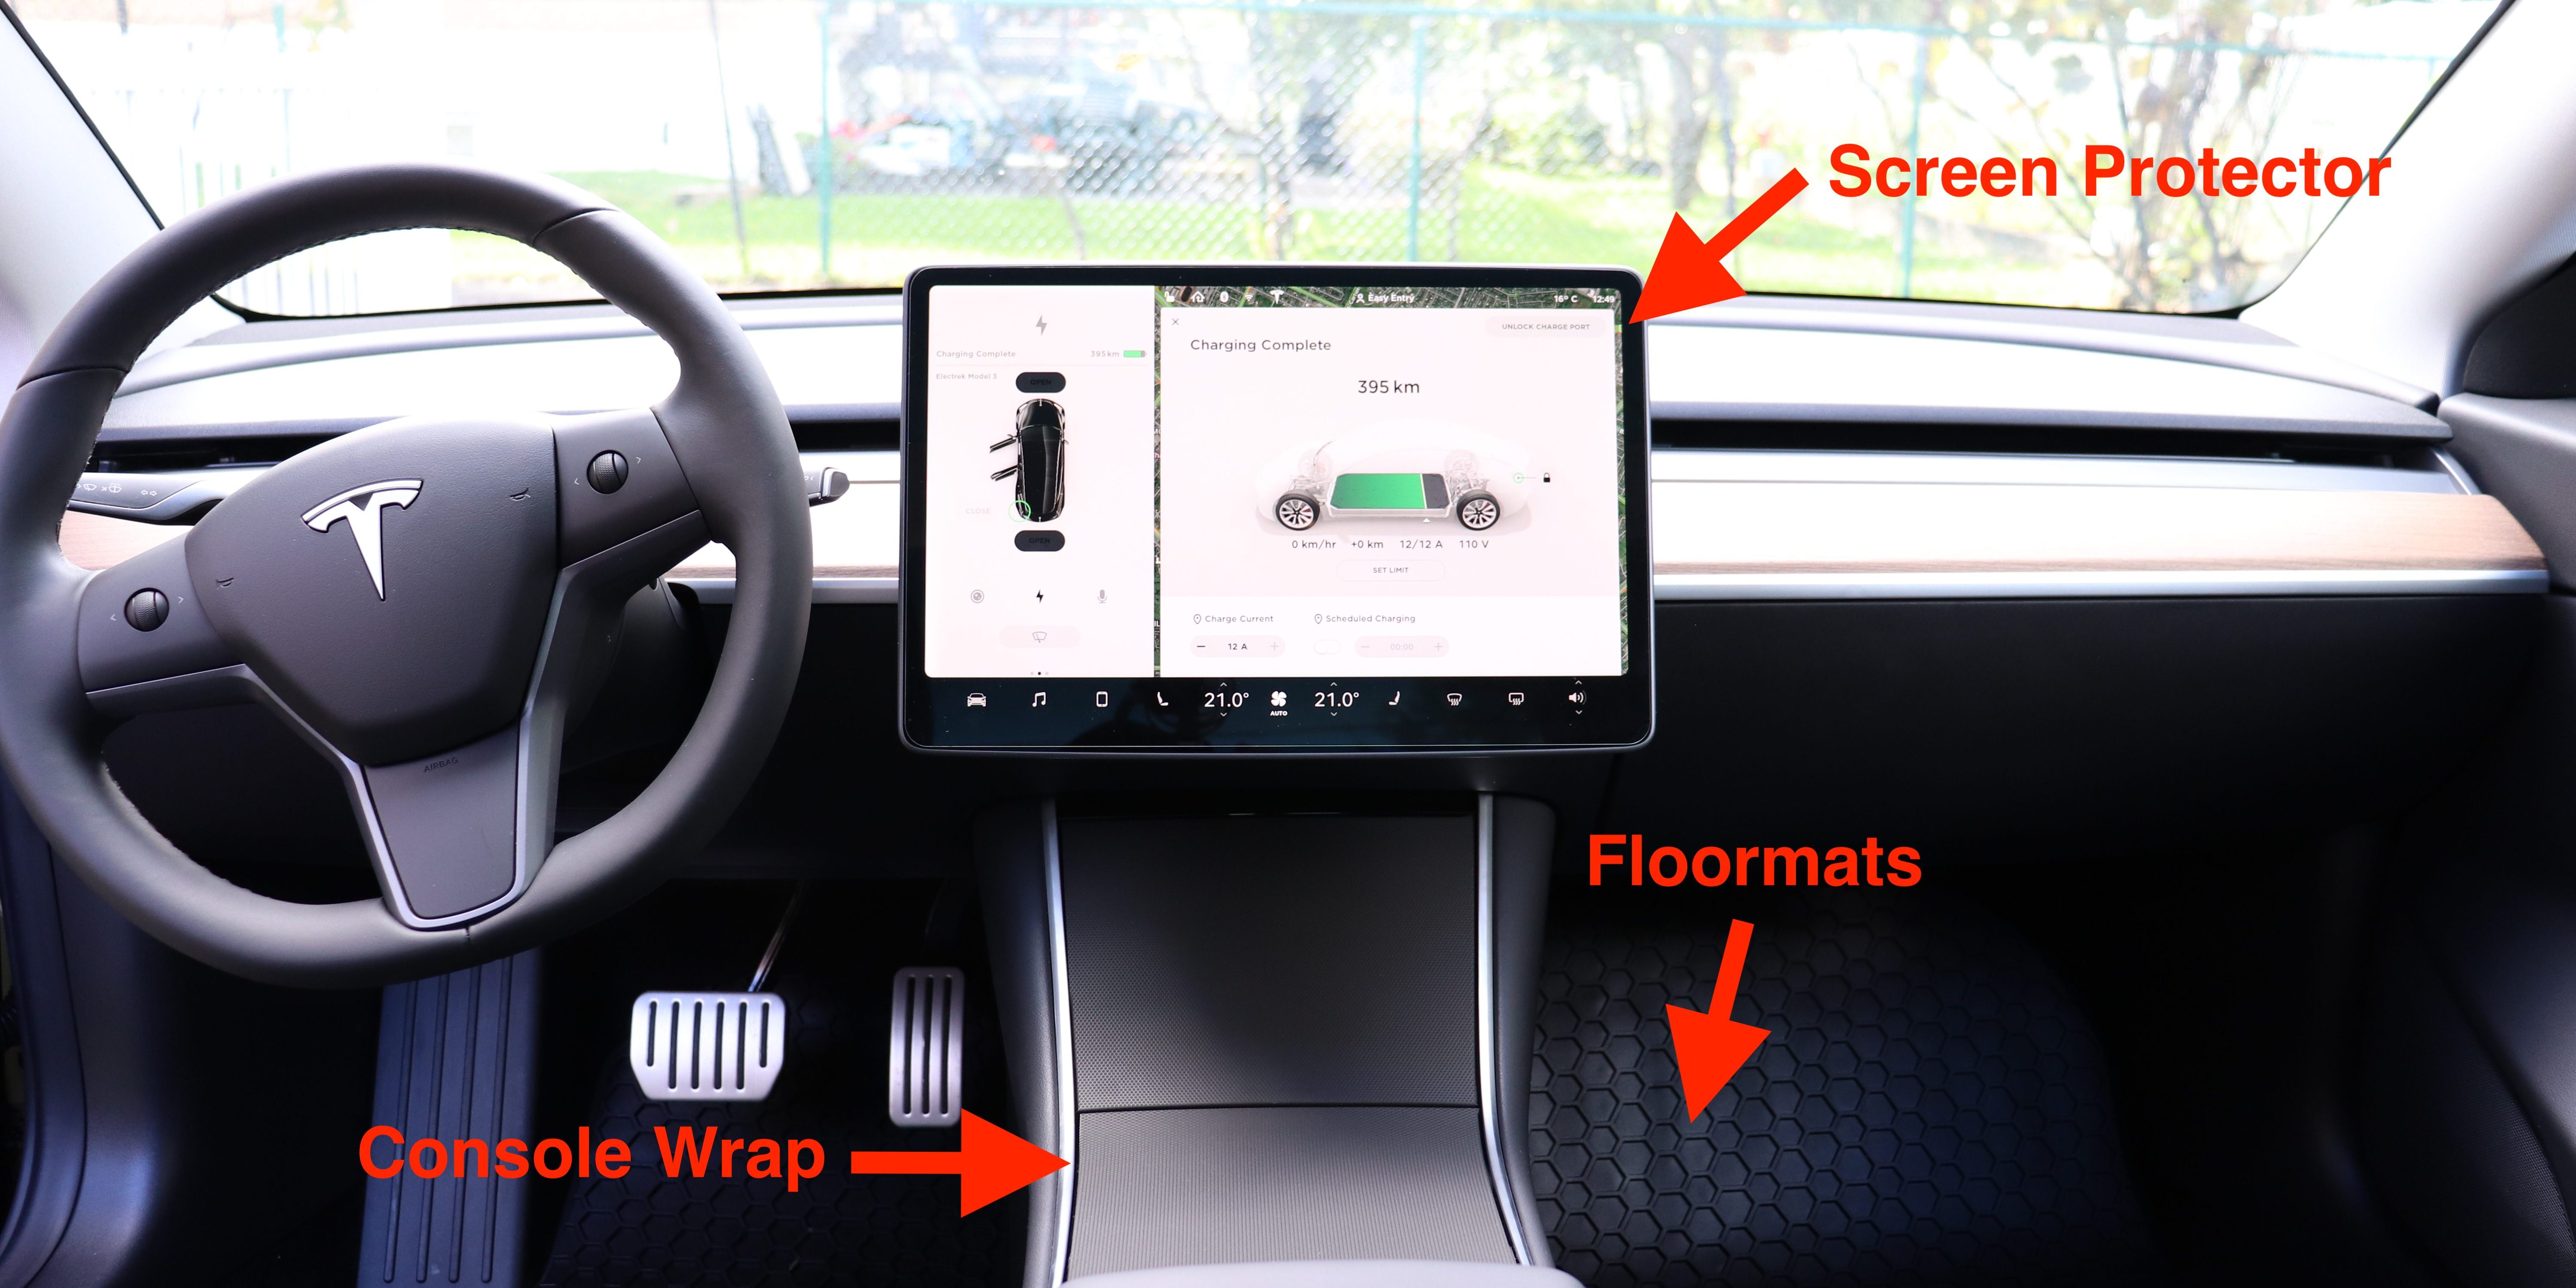 1 Set Car Center Console Wrap Kit Anti-Scratch Protector for Tesla Model 3